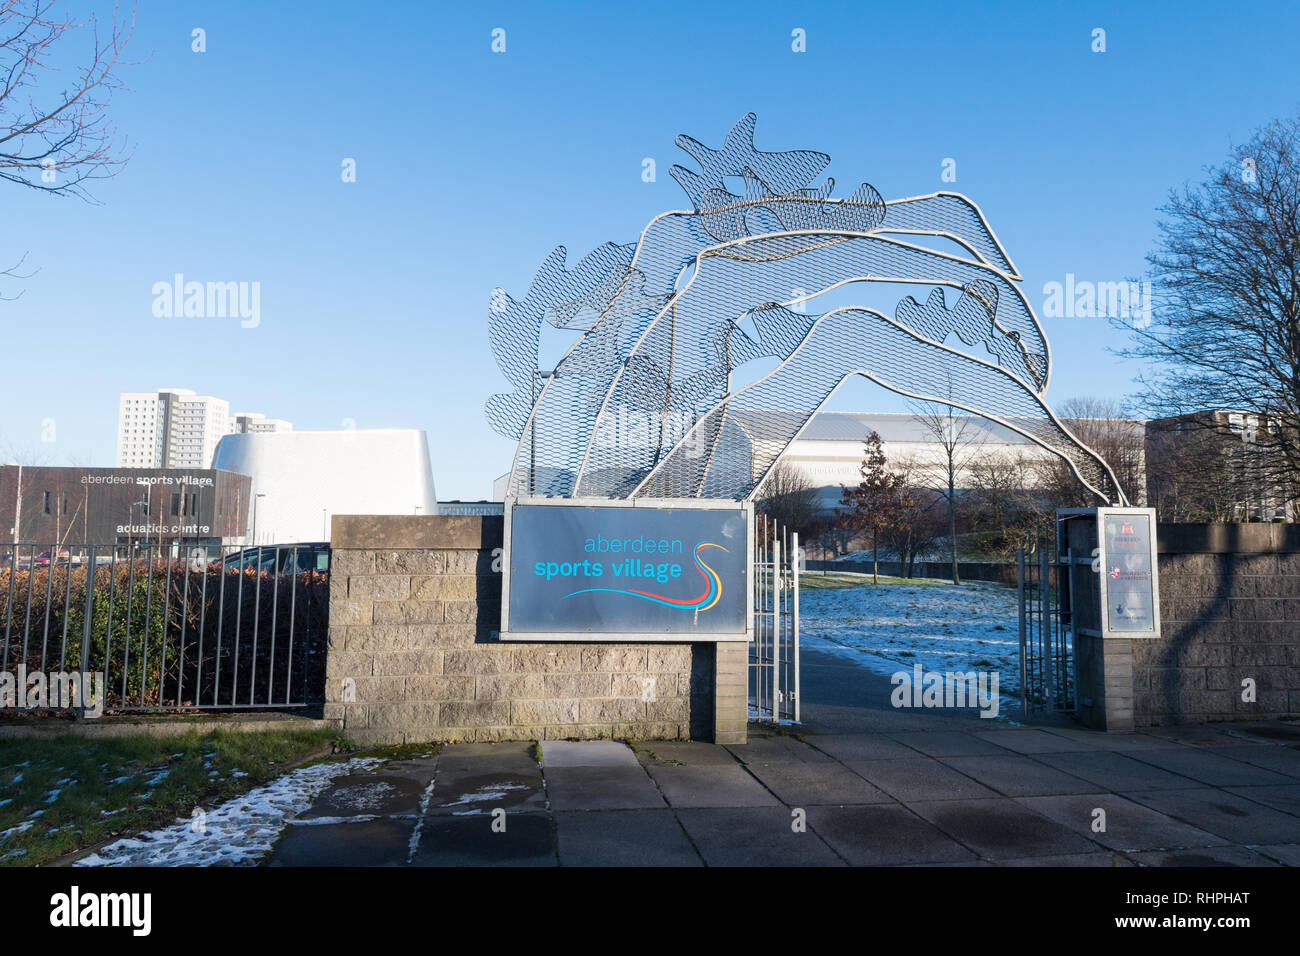 Aberdeen Sports Village and Aquatic Centre, Aberdeen, Scotland, UK Stock Photo